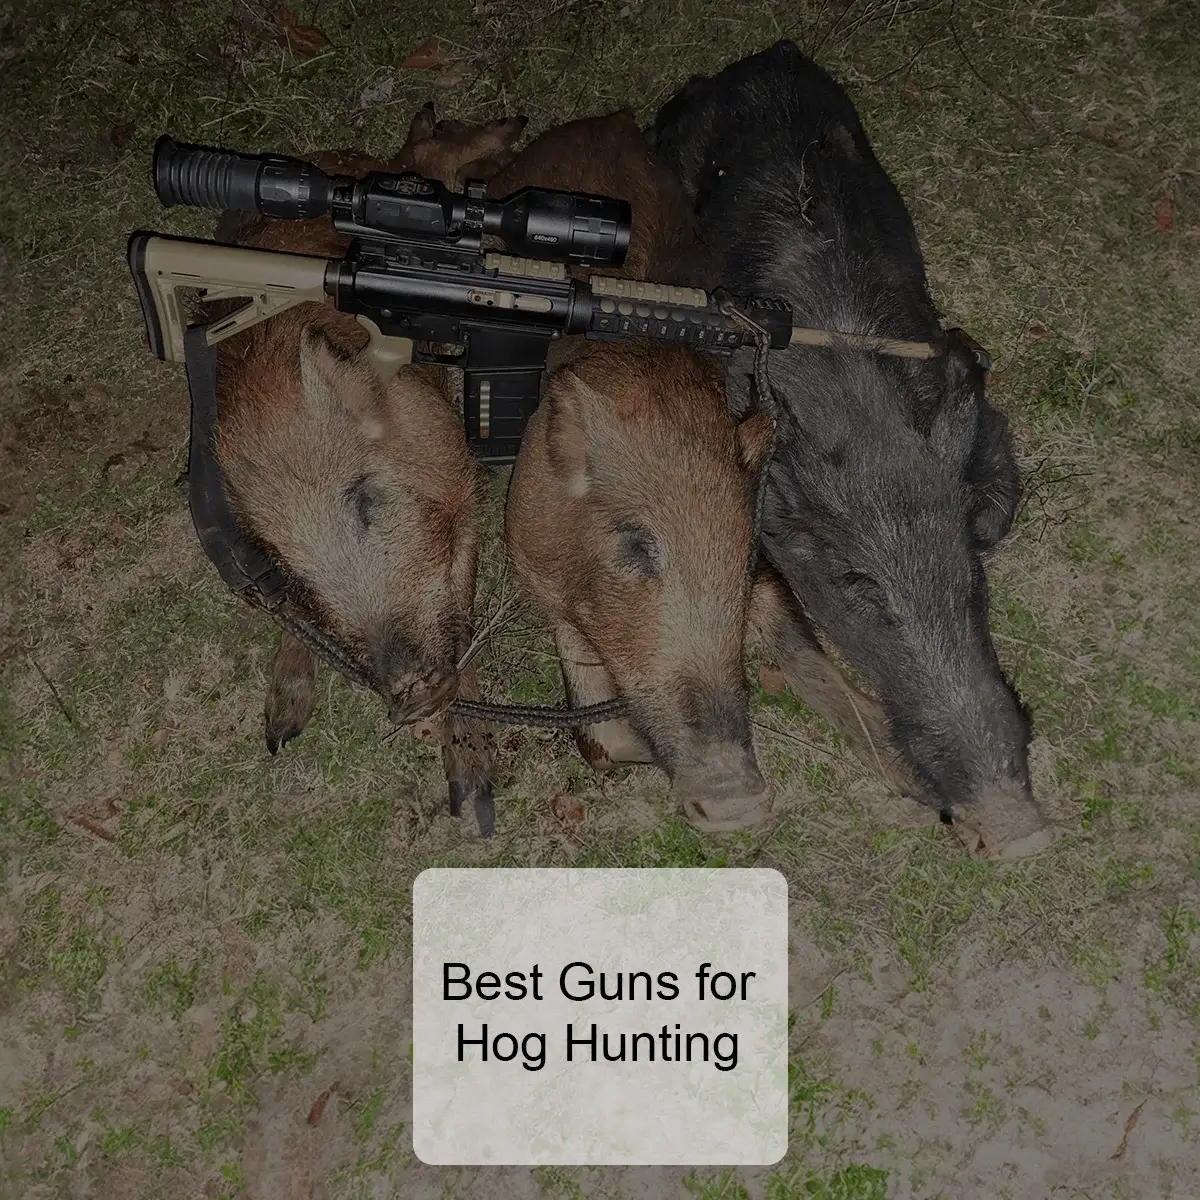 The Best Guns for Hog Hunting